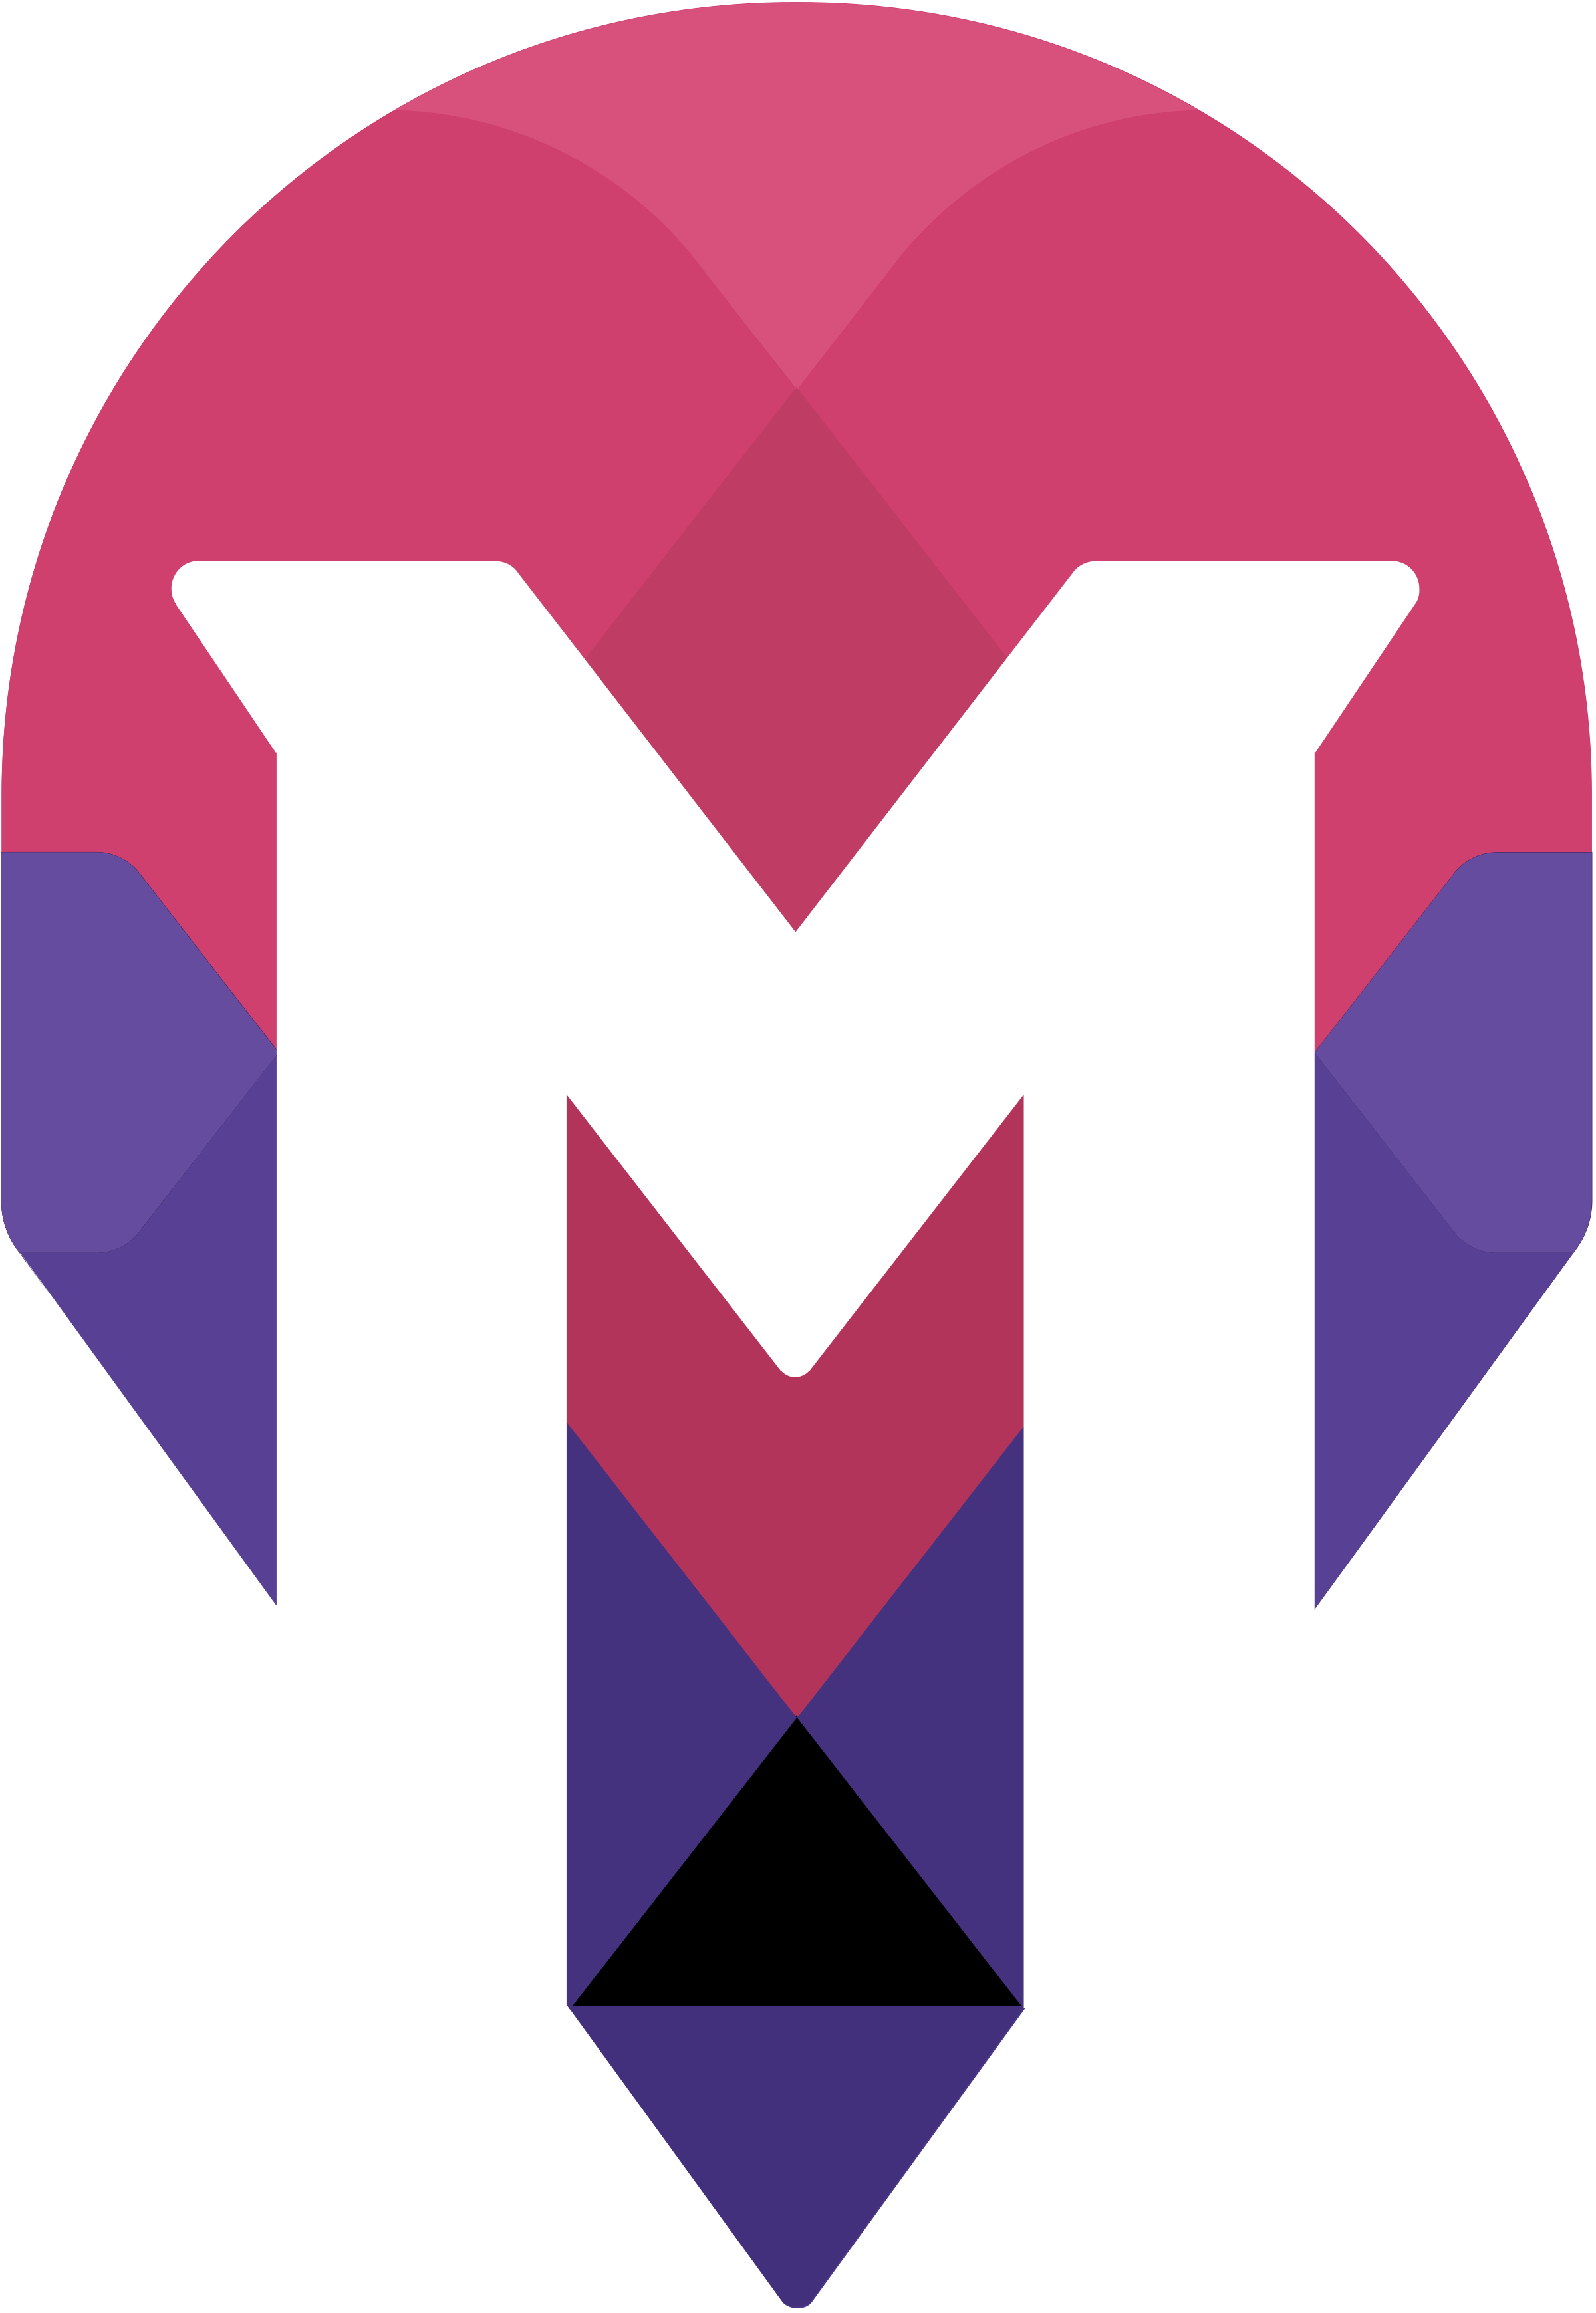 Magneto Logo - Magneto Logo PNG Transparent & SVG Vector - Freebie Supply